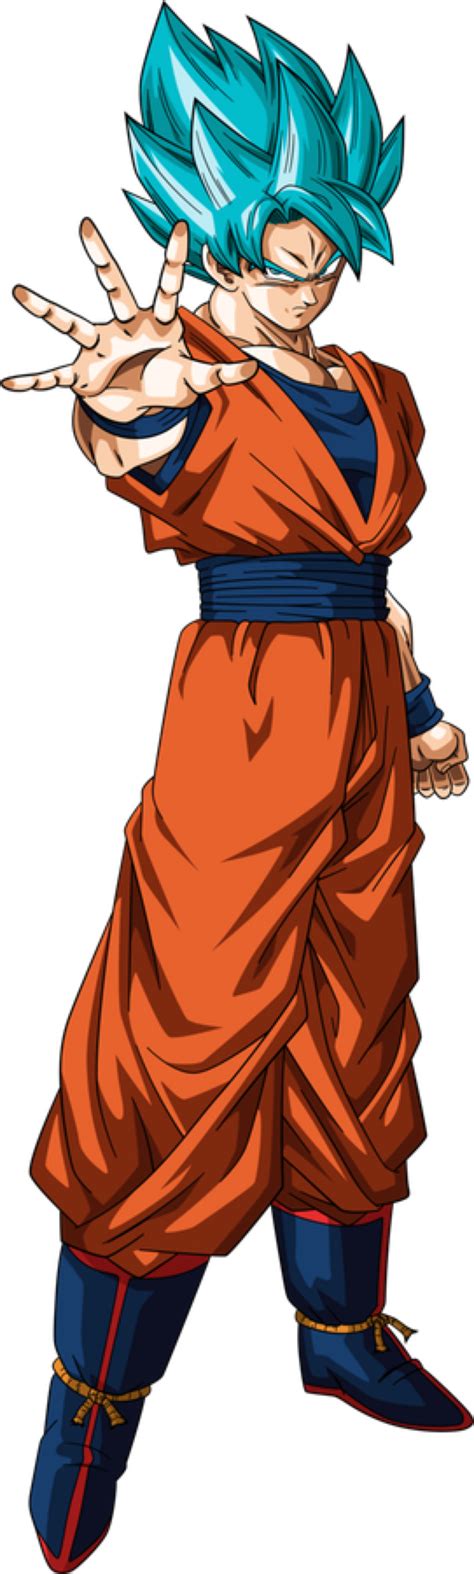 Super Saiyan Blue Goku 5 By Rayzorblade189 On Deviantart Akira